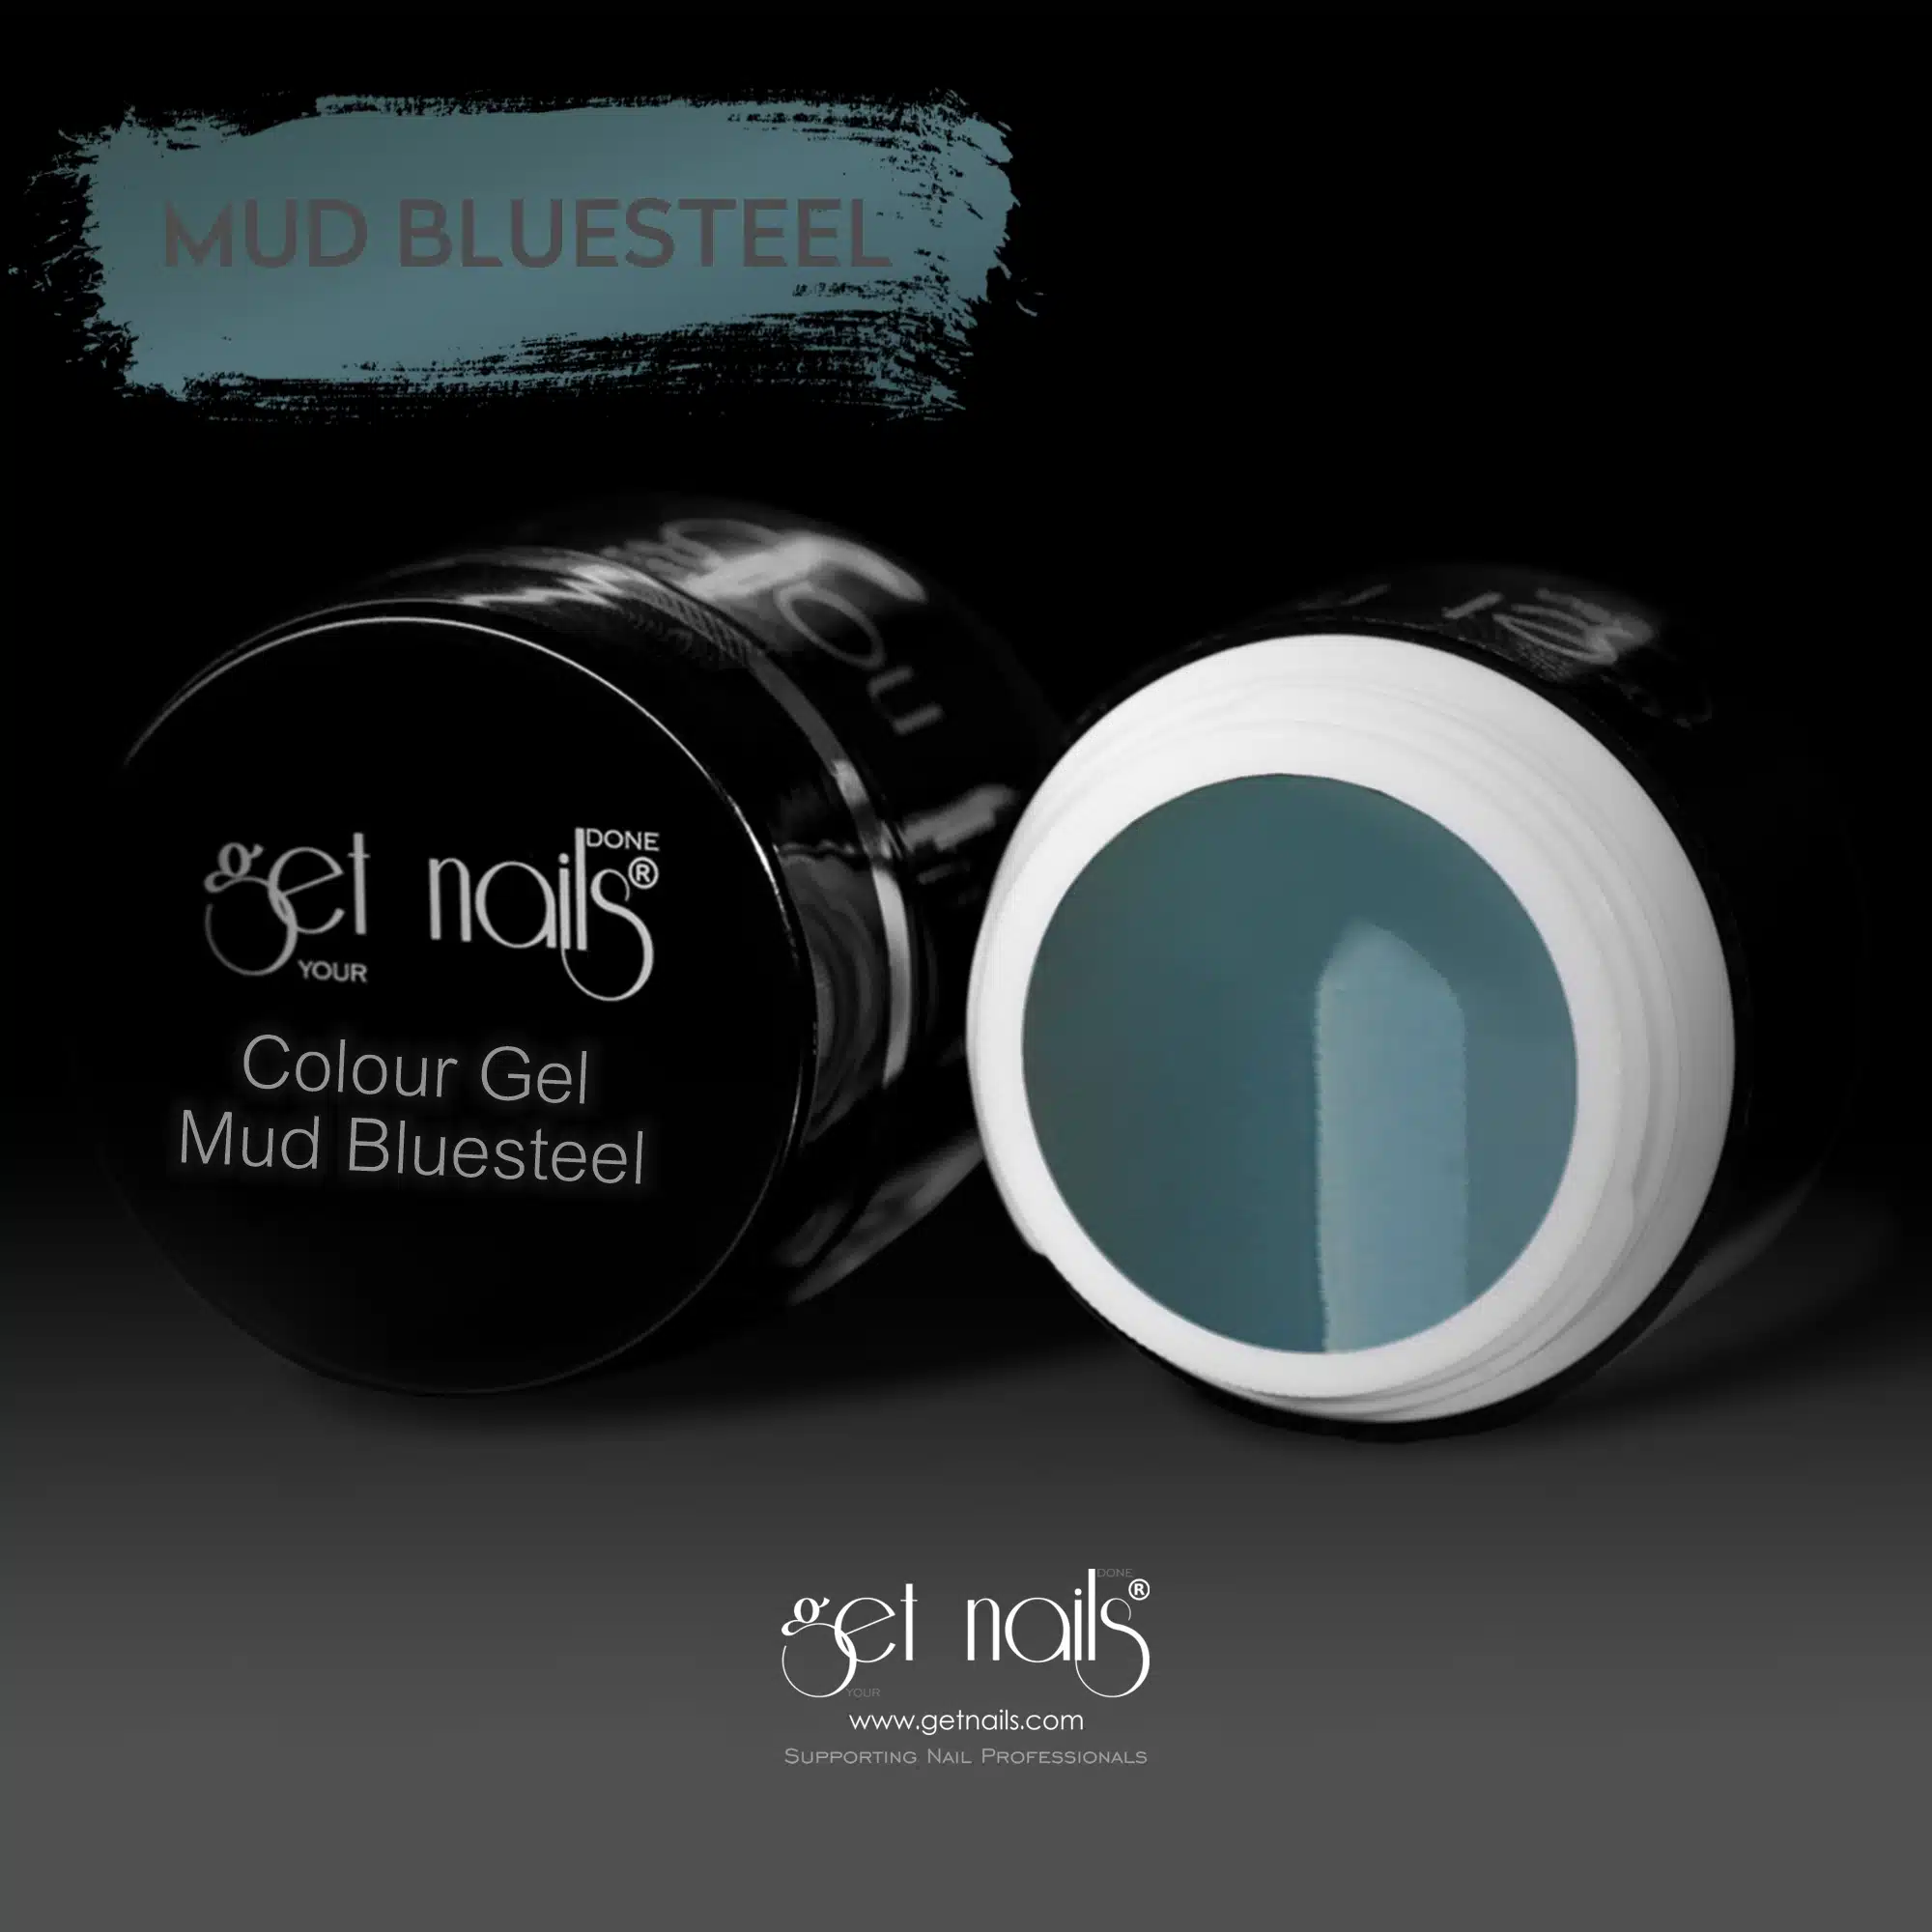 Get Nails Austria - Color Gel Mud Bluesteel 5g